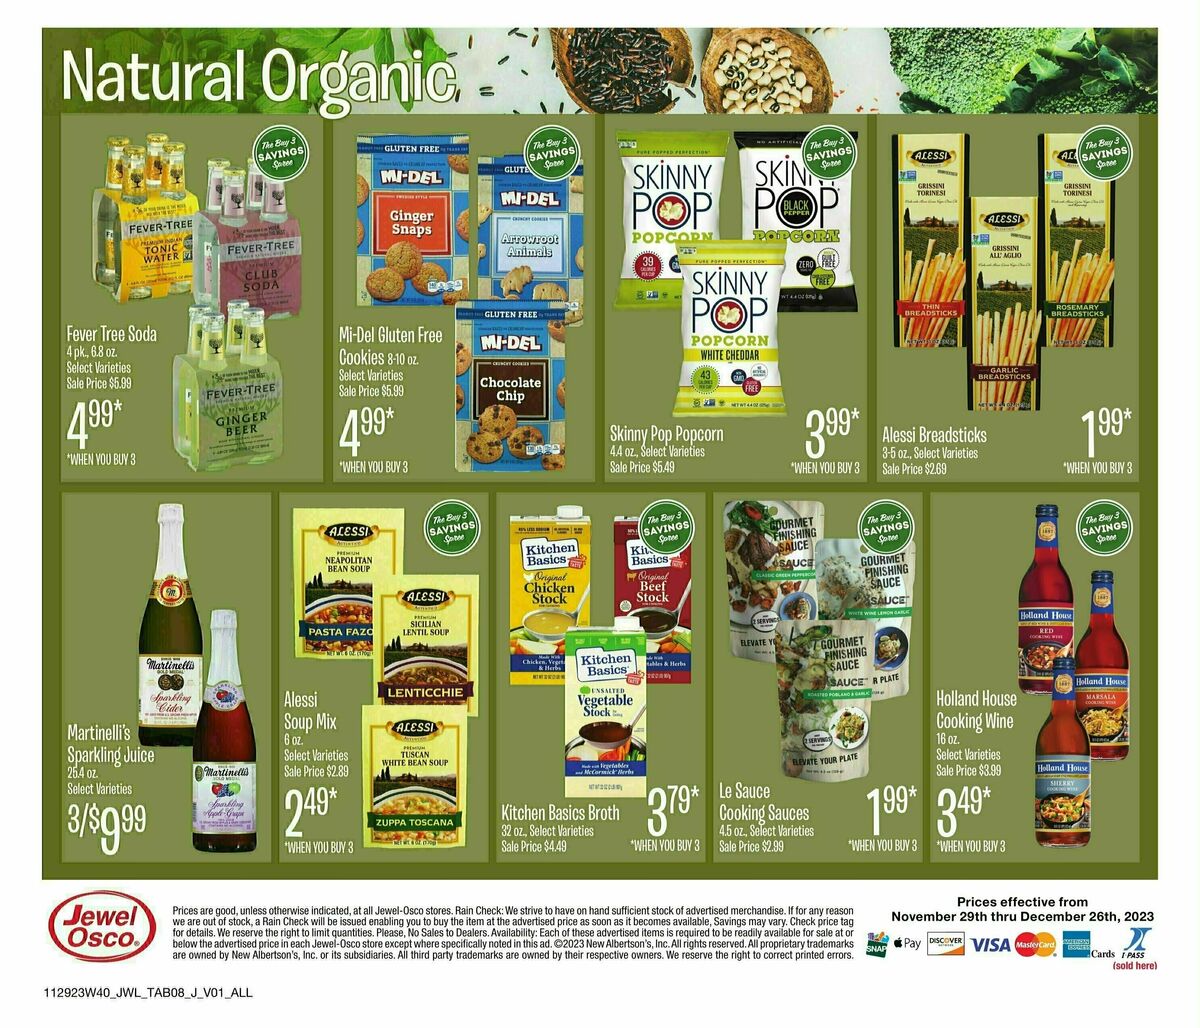 Jewel Osco Organics Guide Weekly Ad from November 29